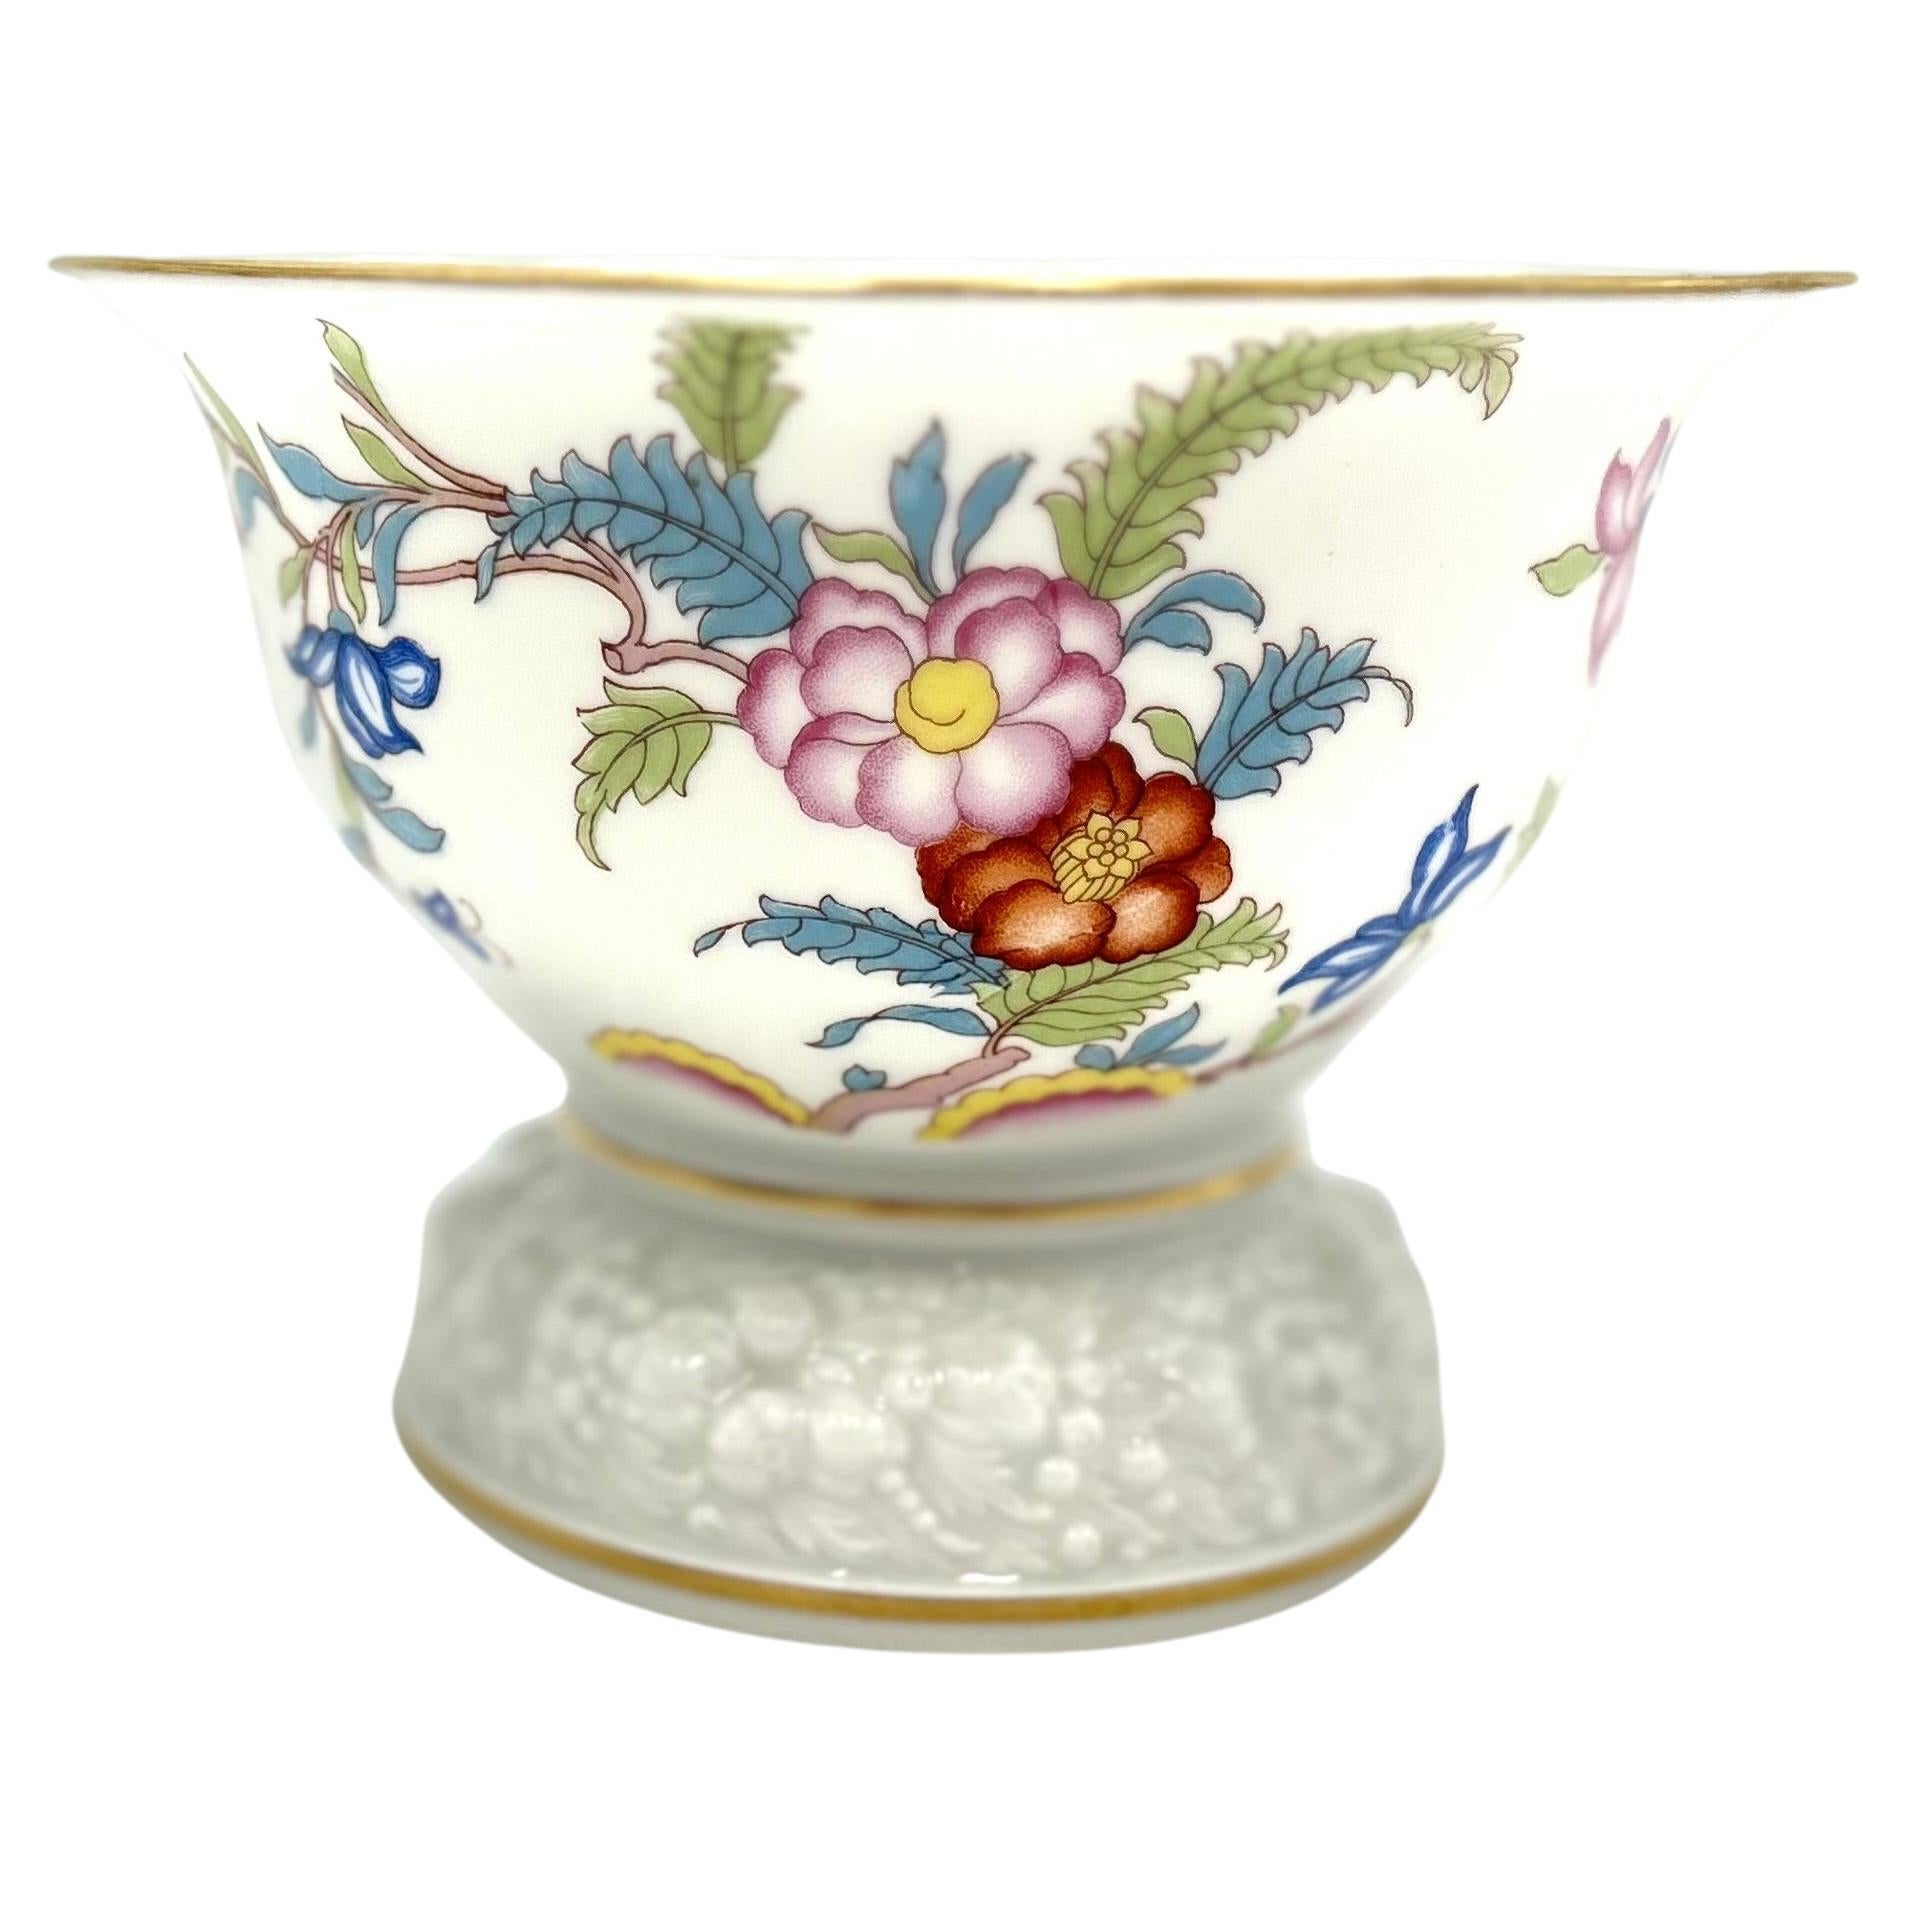 Rosenthal Porcelain Bowl, Germany, 1932